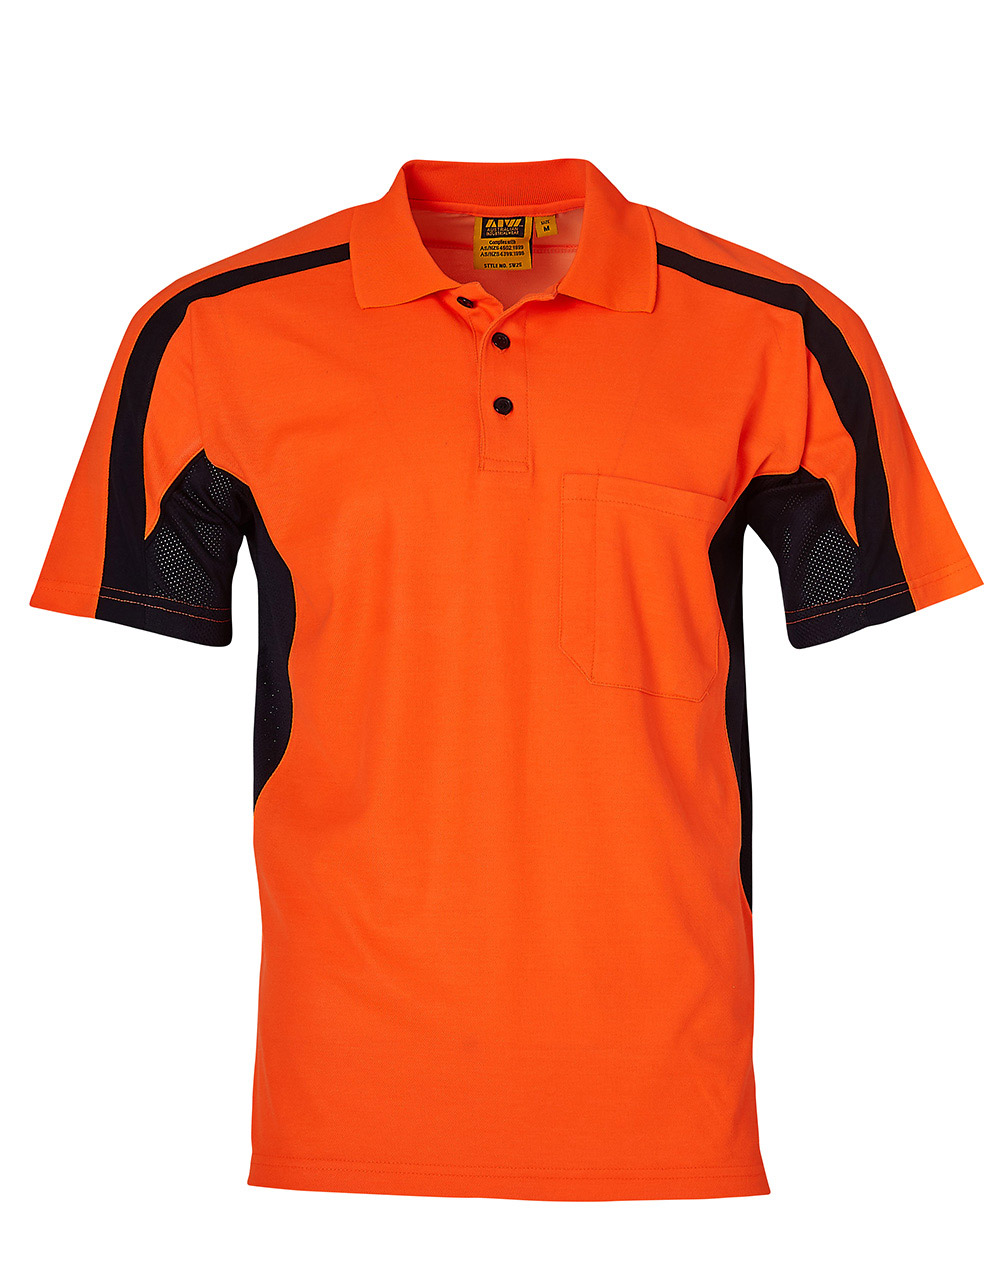 Customized (Orange Navy) Hi Vis Fashion Unisex Mens Safety Polos Online Perth Australia